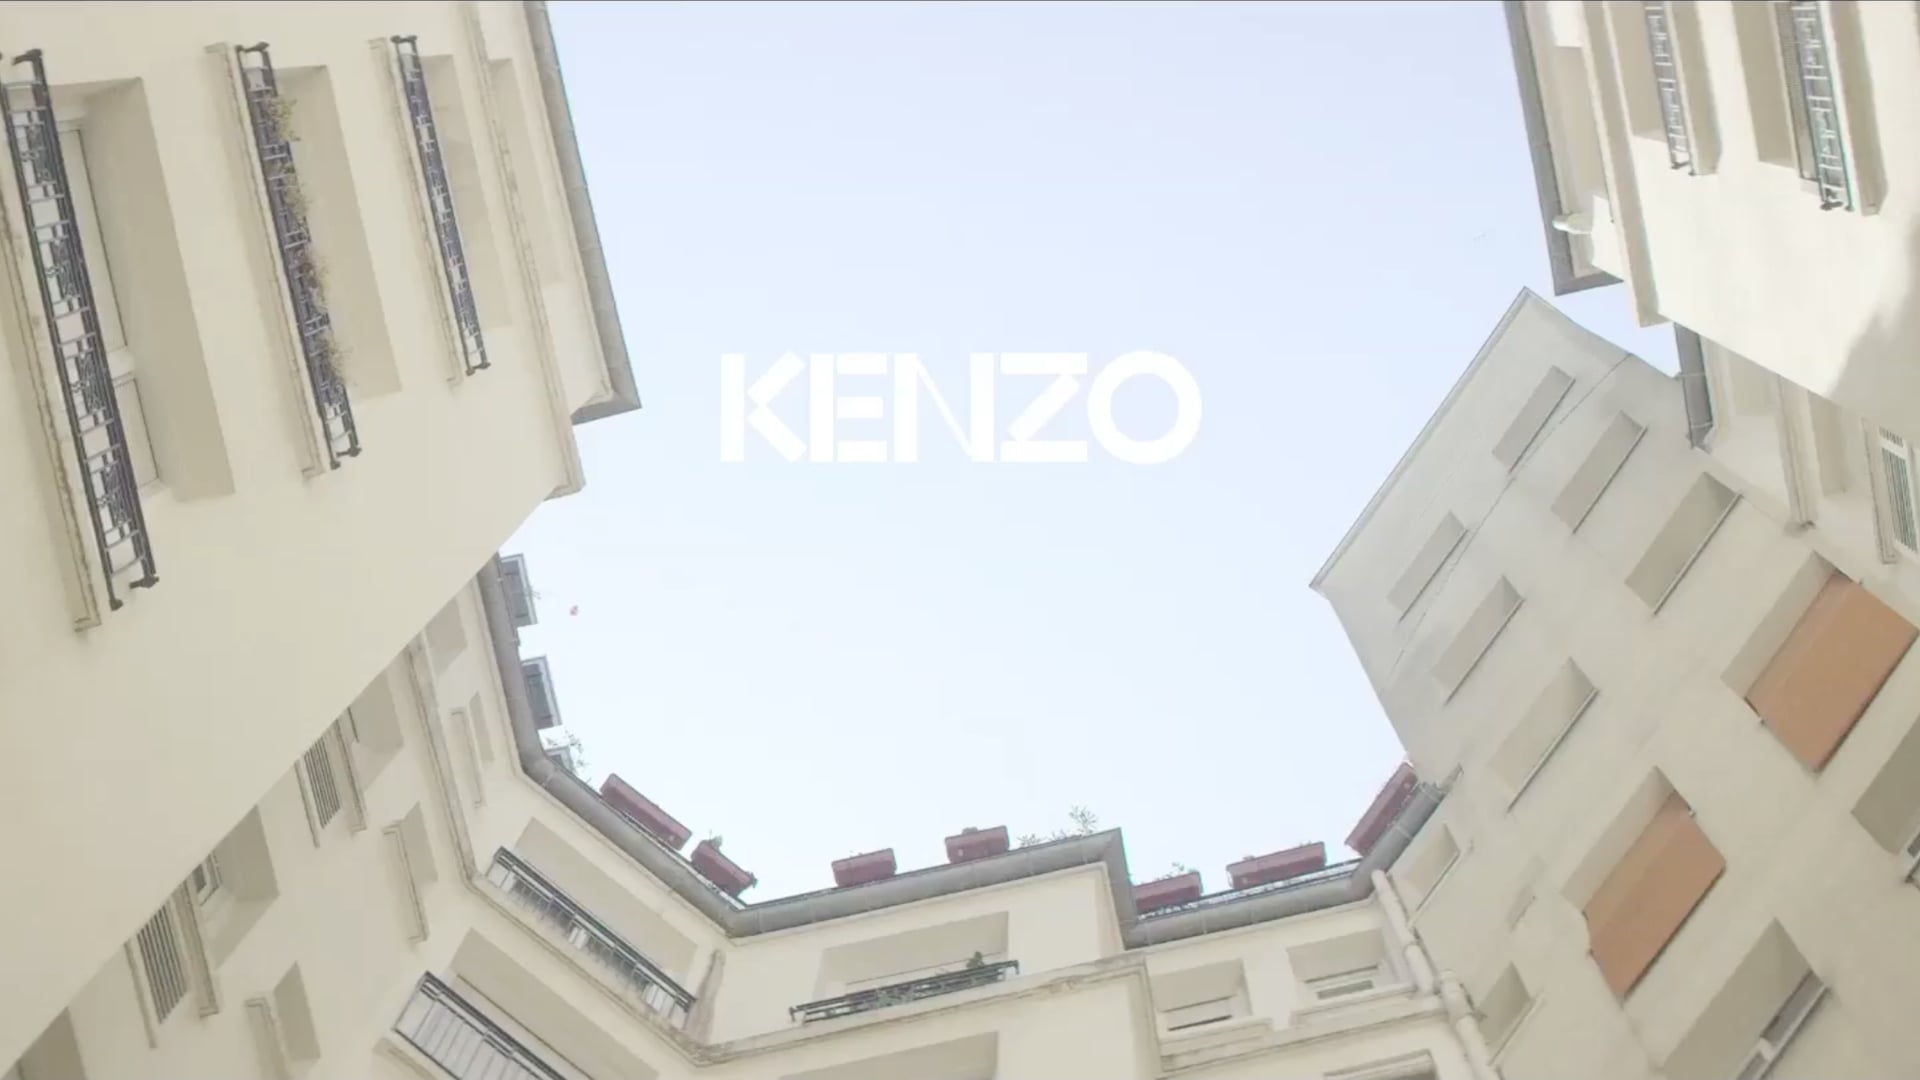 Kenzo "Totem" | Cédric Dubourg